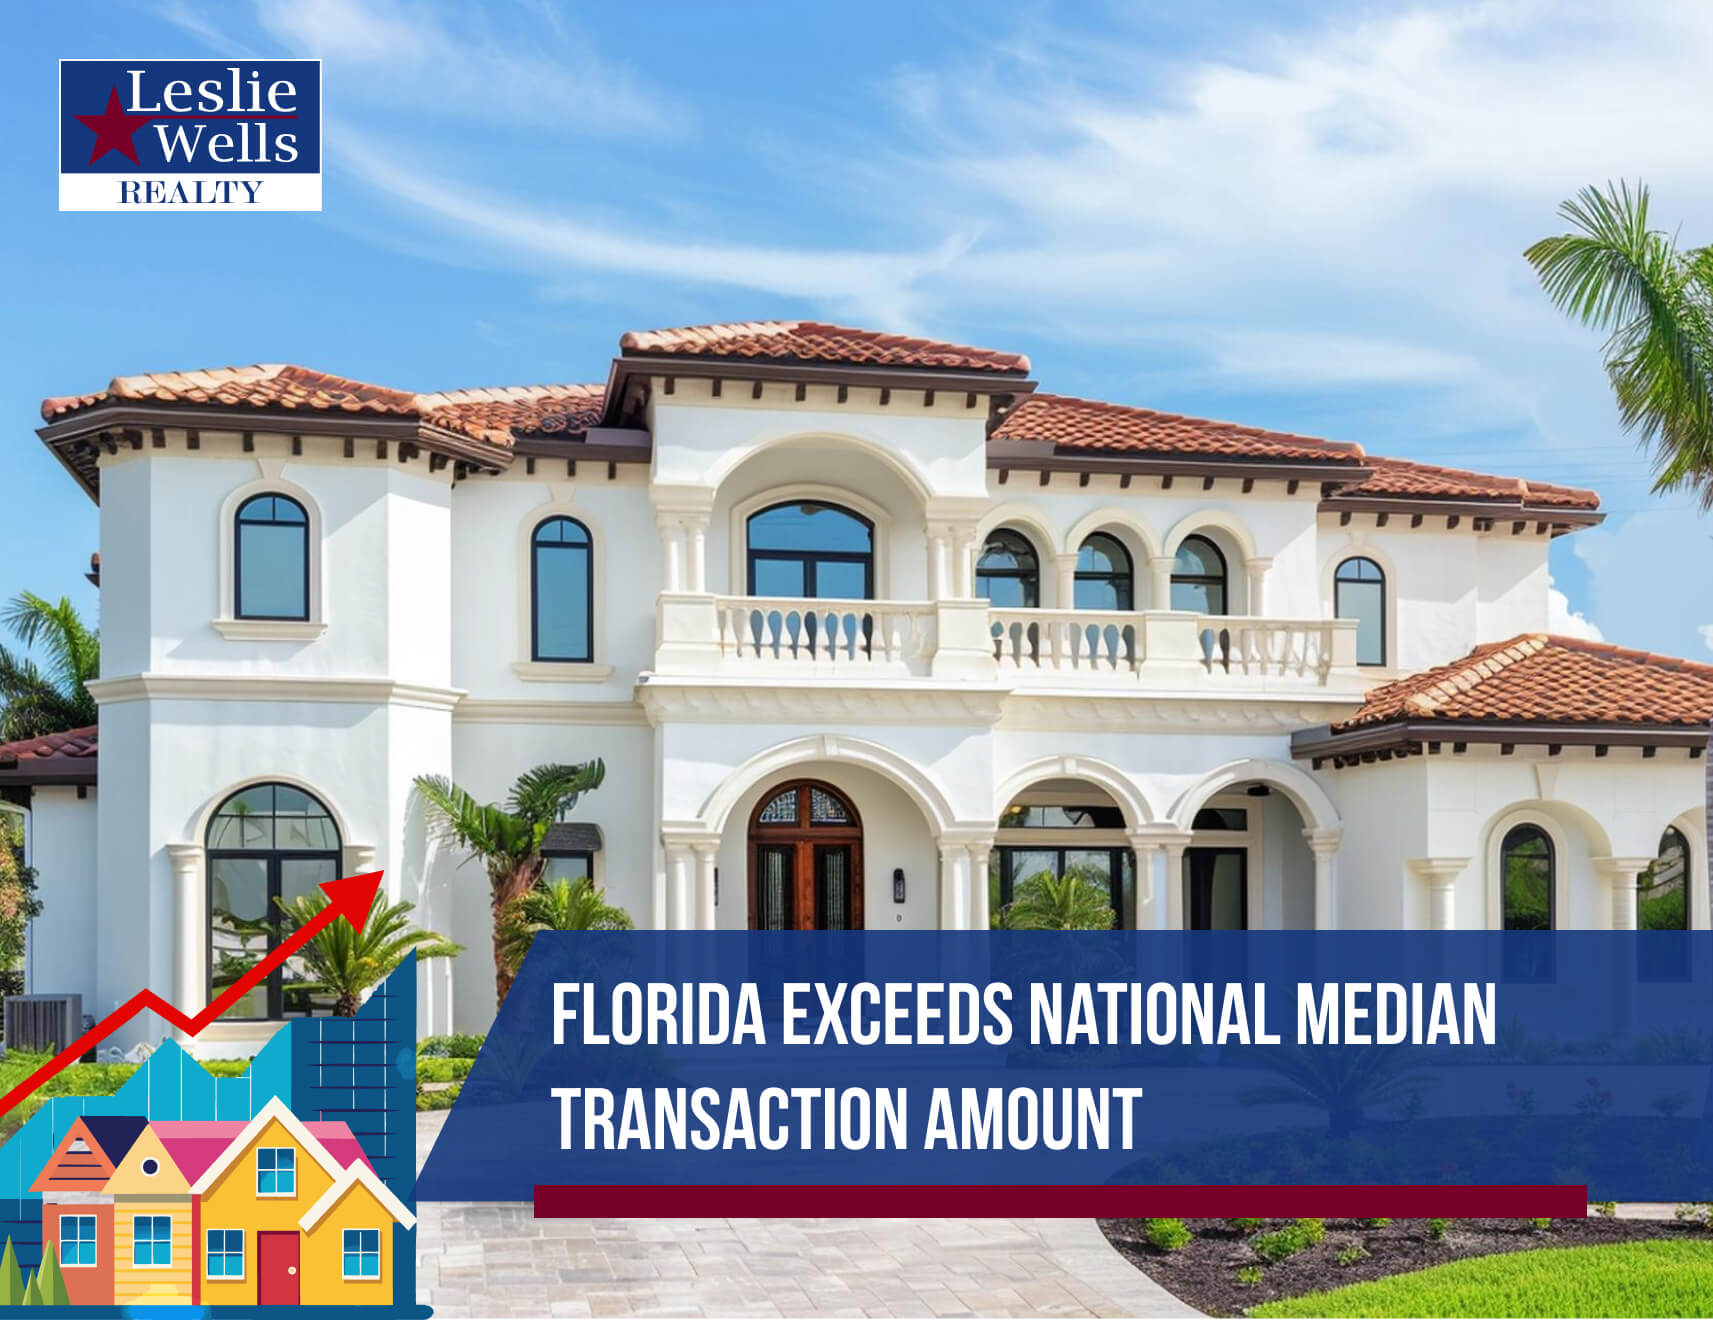 Florida Exceeds the National Median Transaction Amount